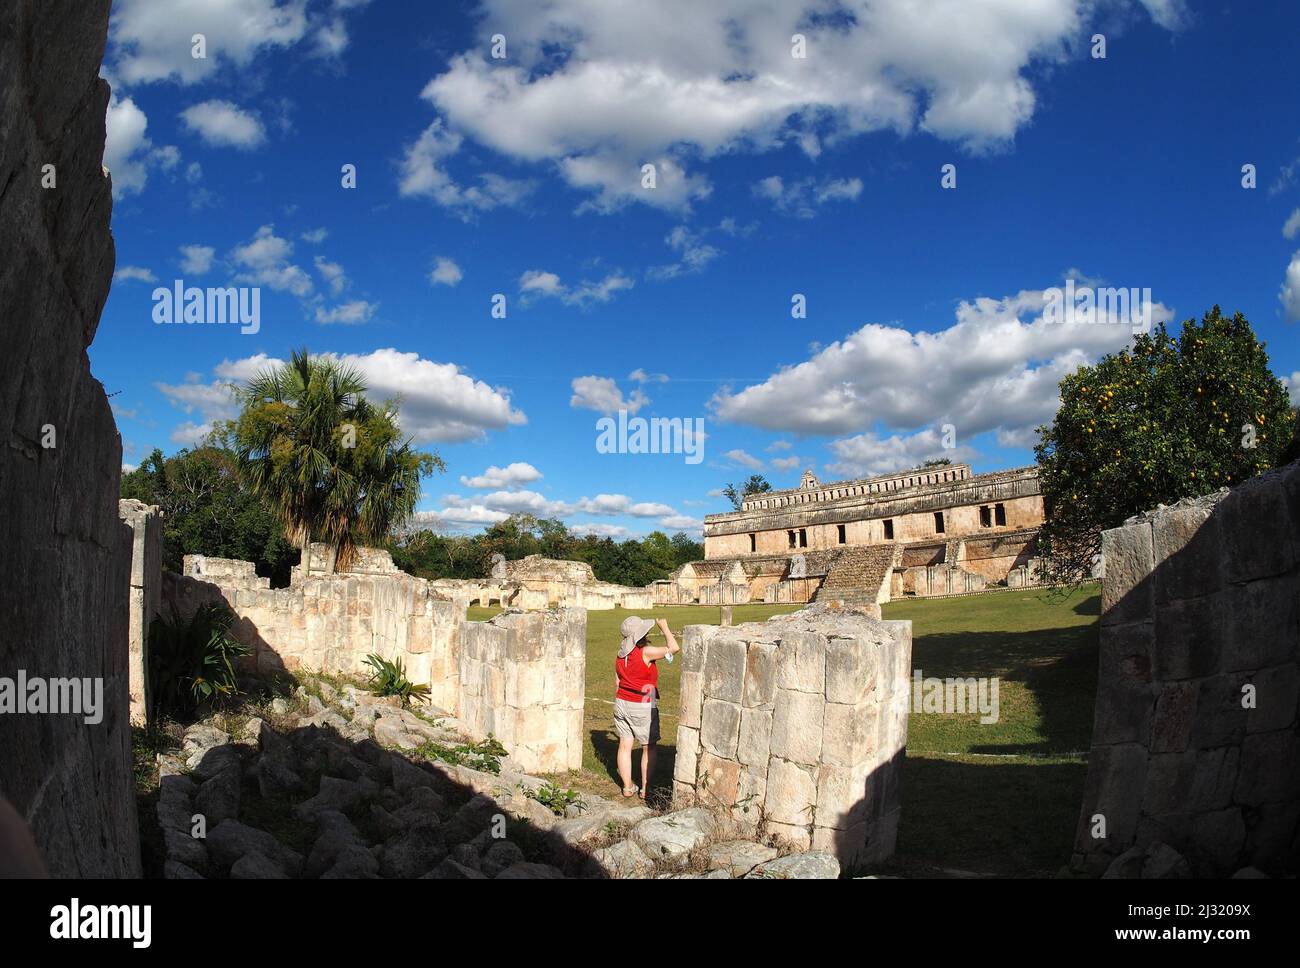 Mayan excavation of Kabah at Ruta Puuc, Yucatan, Mexico c. MR: Andrea Seifert Stock Photo